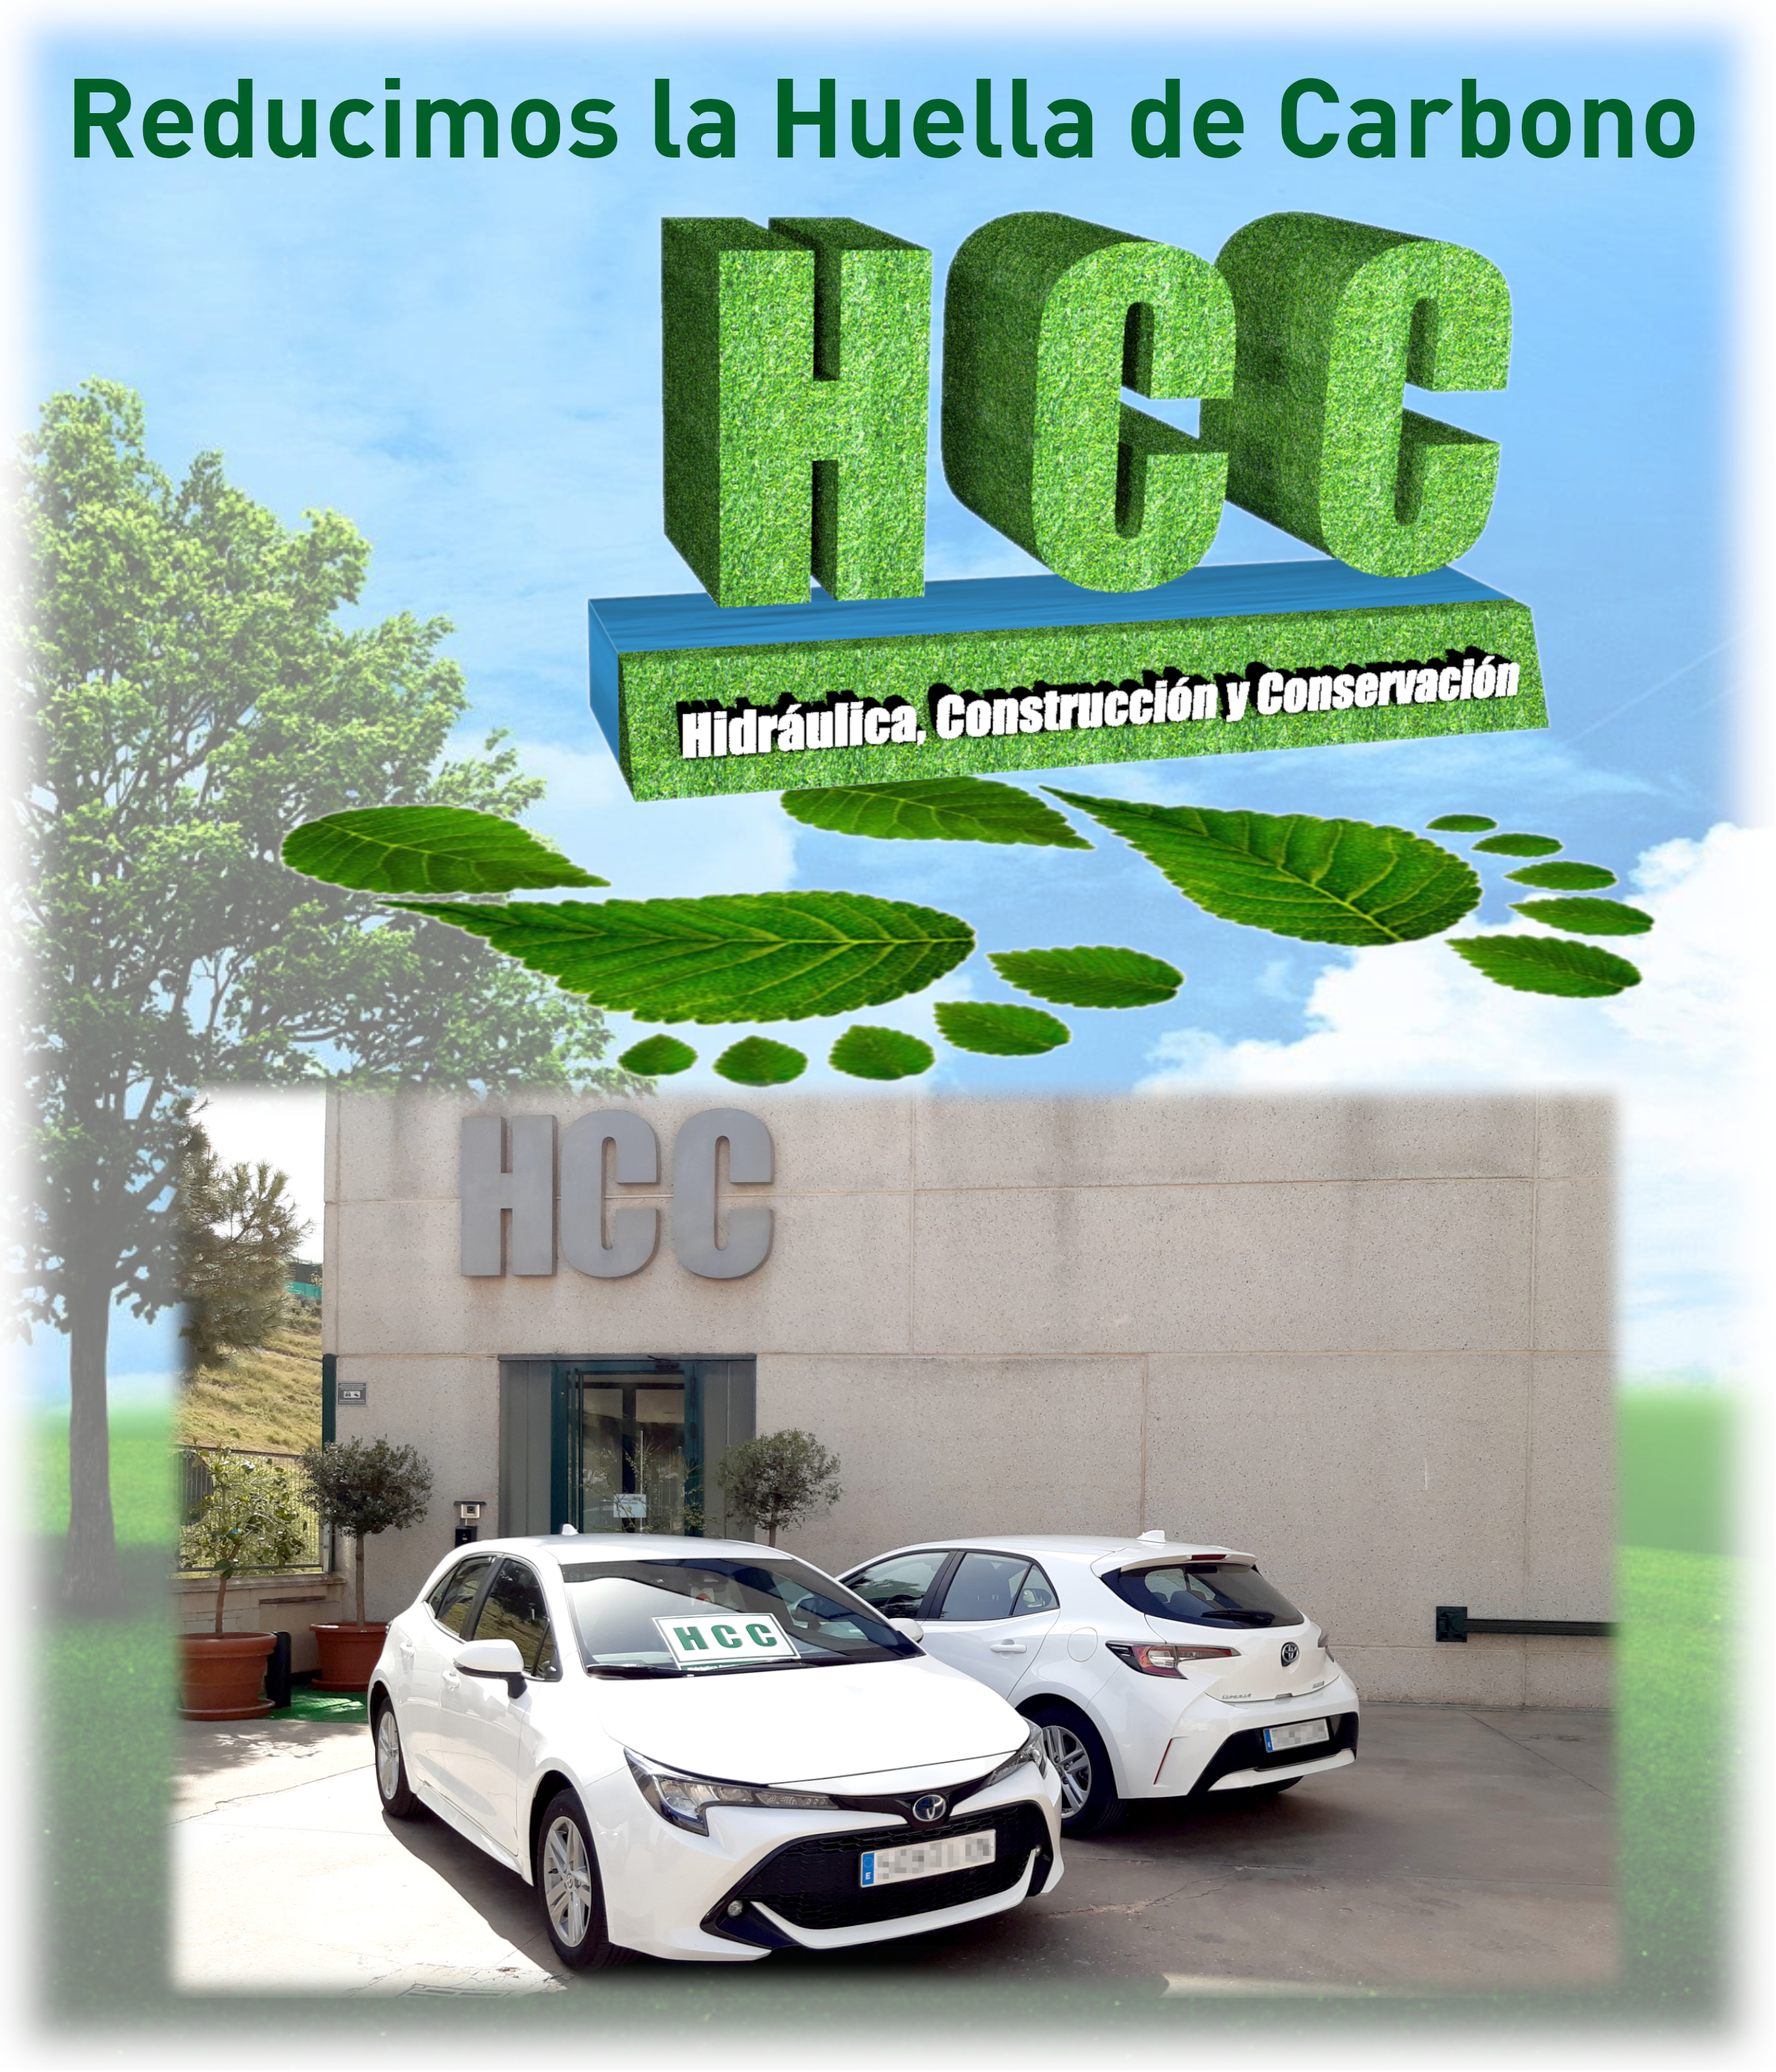 HCC incorporates hybrid vehicles into its fleet to reduce its environmental impact